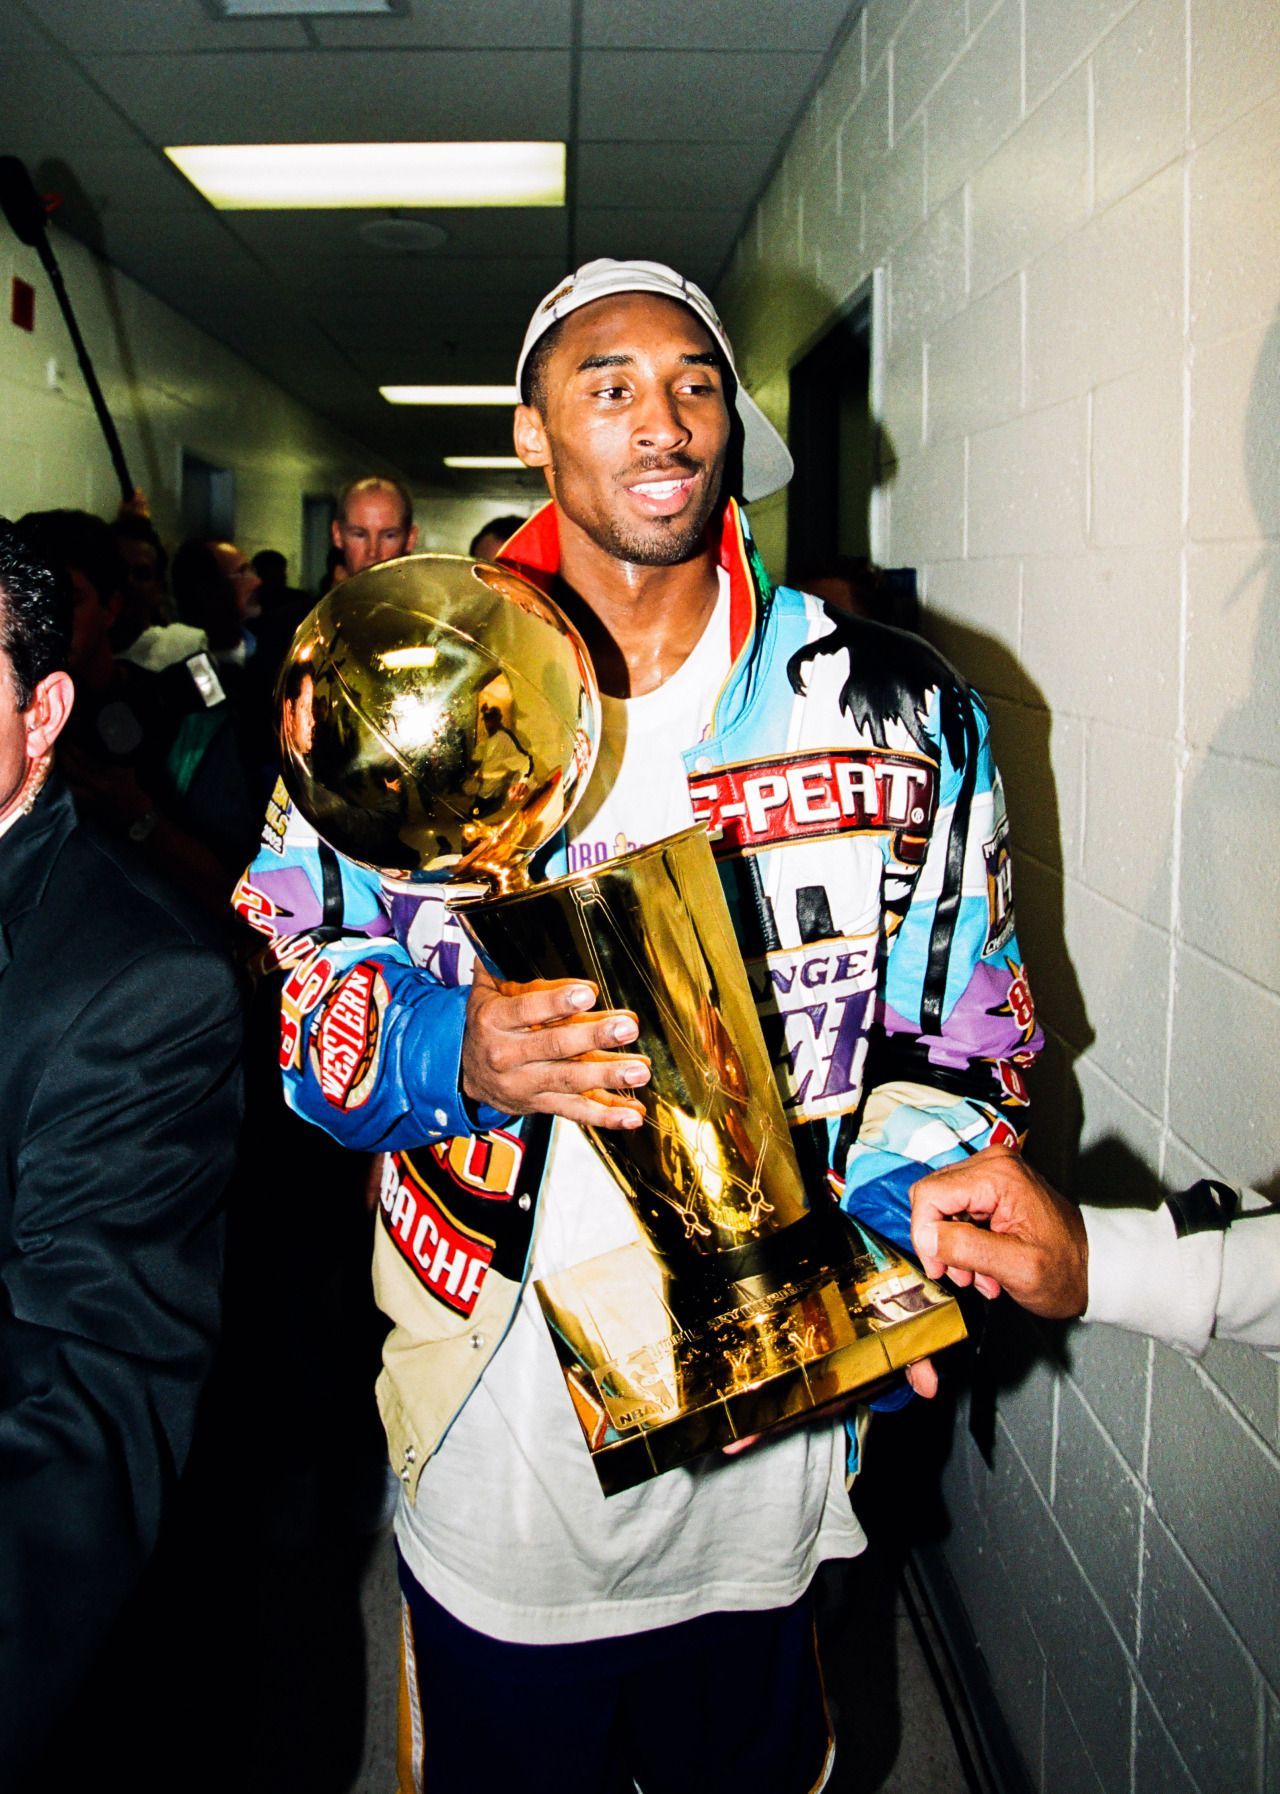 NBA Finals Archivio. Kobe bryant picture, Kobe bryant wallpaper, Kobe bryant poster